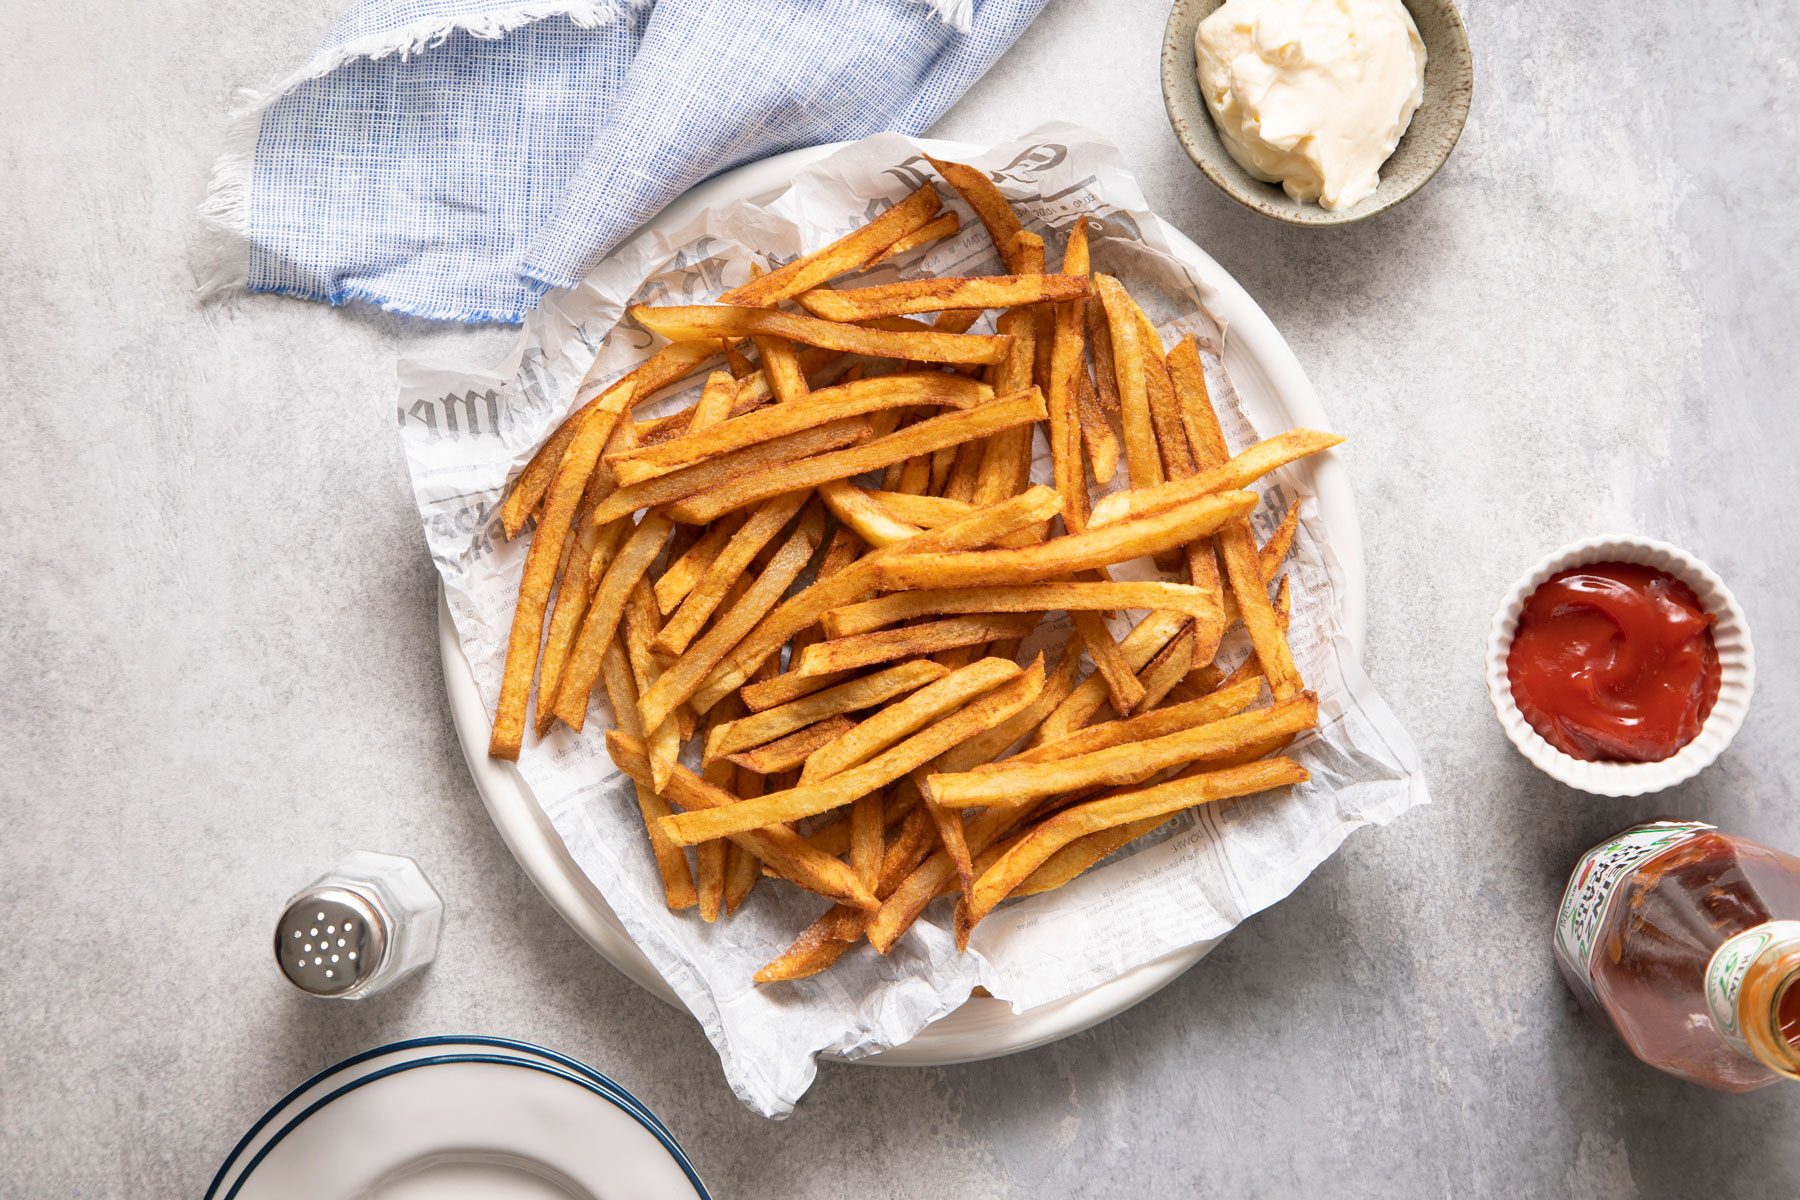 Restaurant quality truffle sweet potato fries - Eat Like You're on